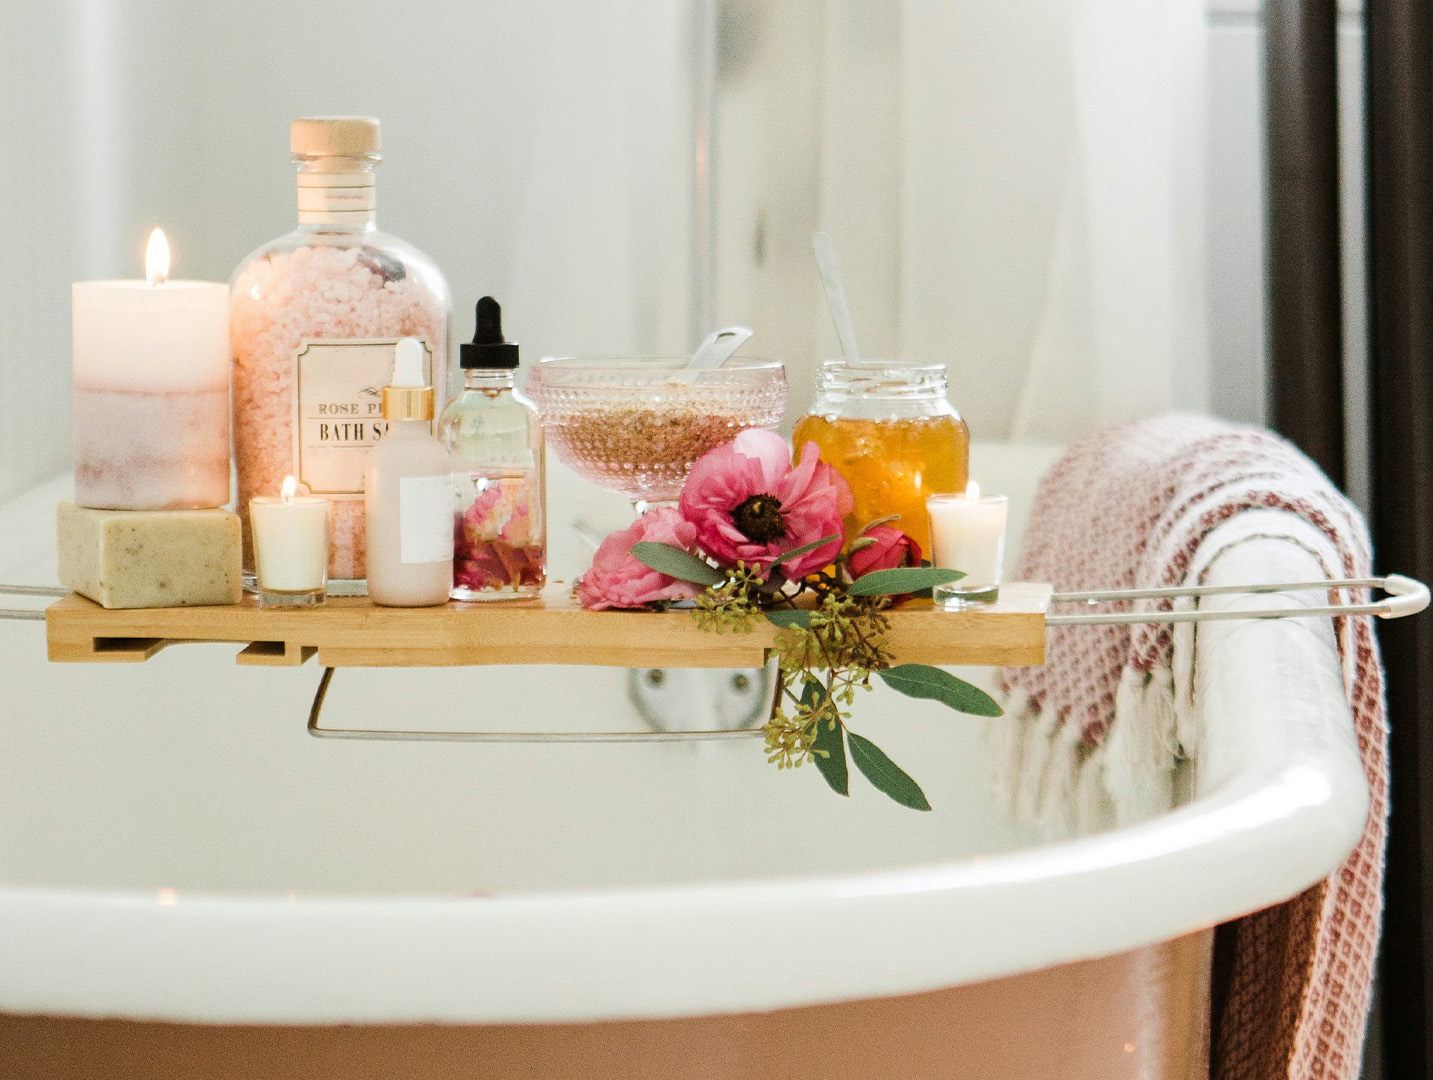 Lit candles, bath salts, soap, and flowers sitting on a wooden bath rack on a bathtub.